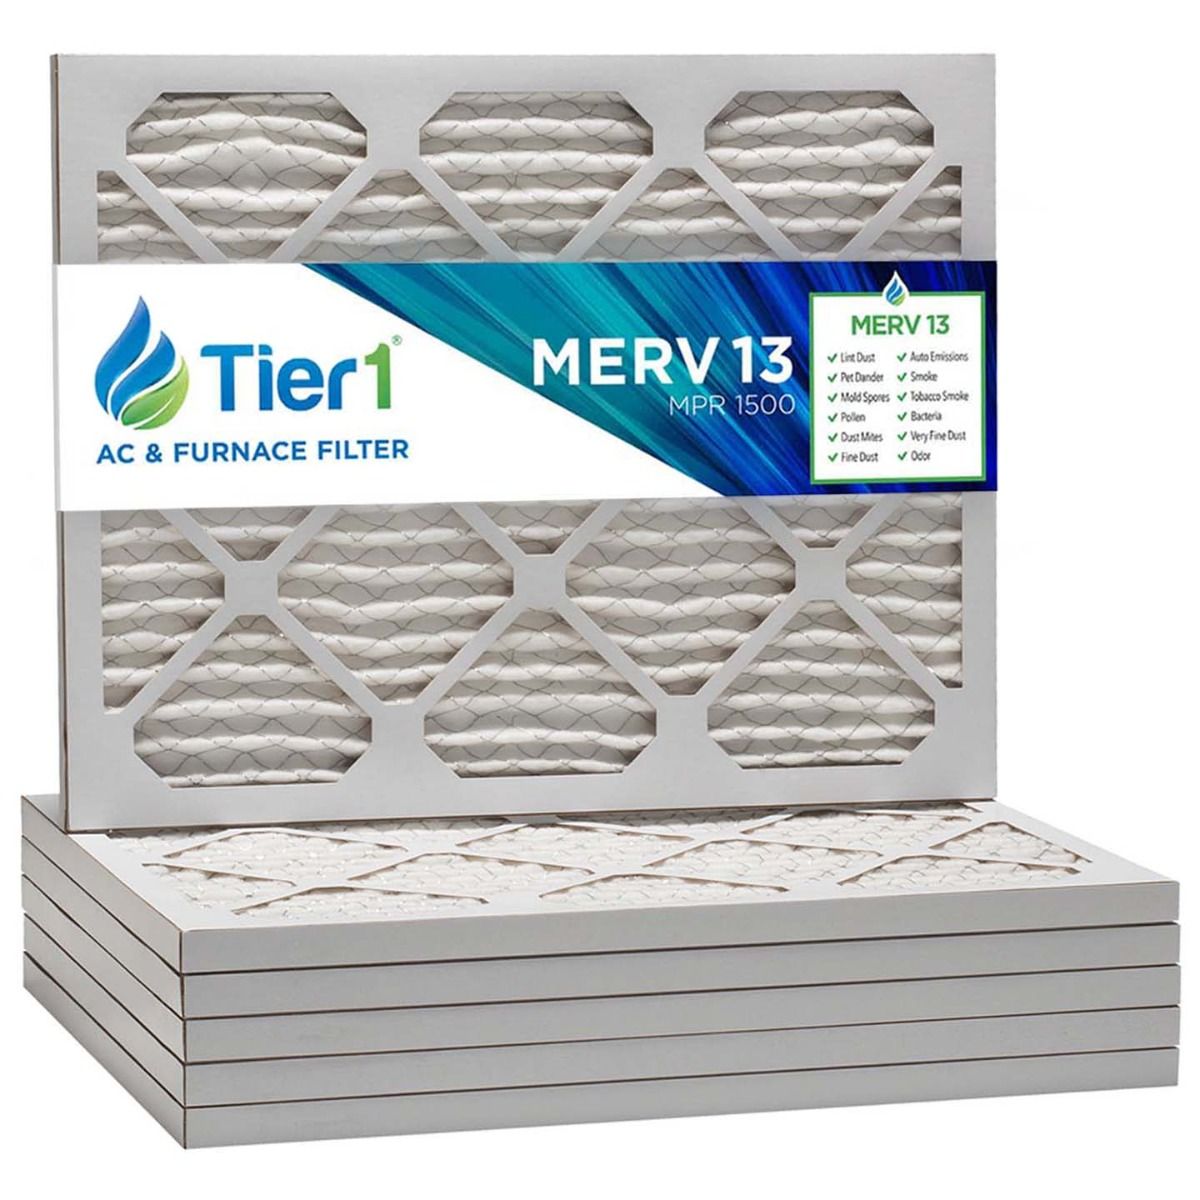 16x20x1 Merv 13 Universal Air Filter By Tier1 (Single Filter)